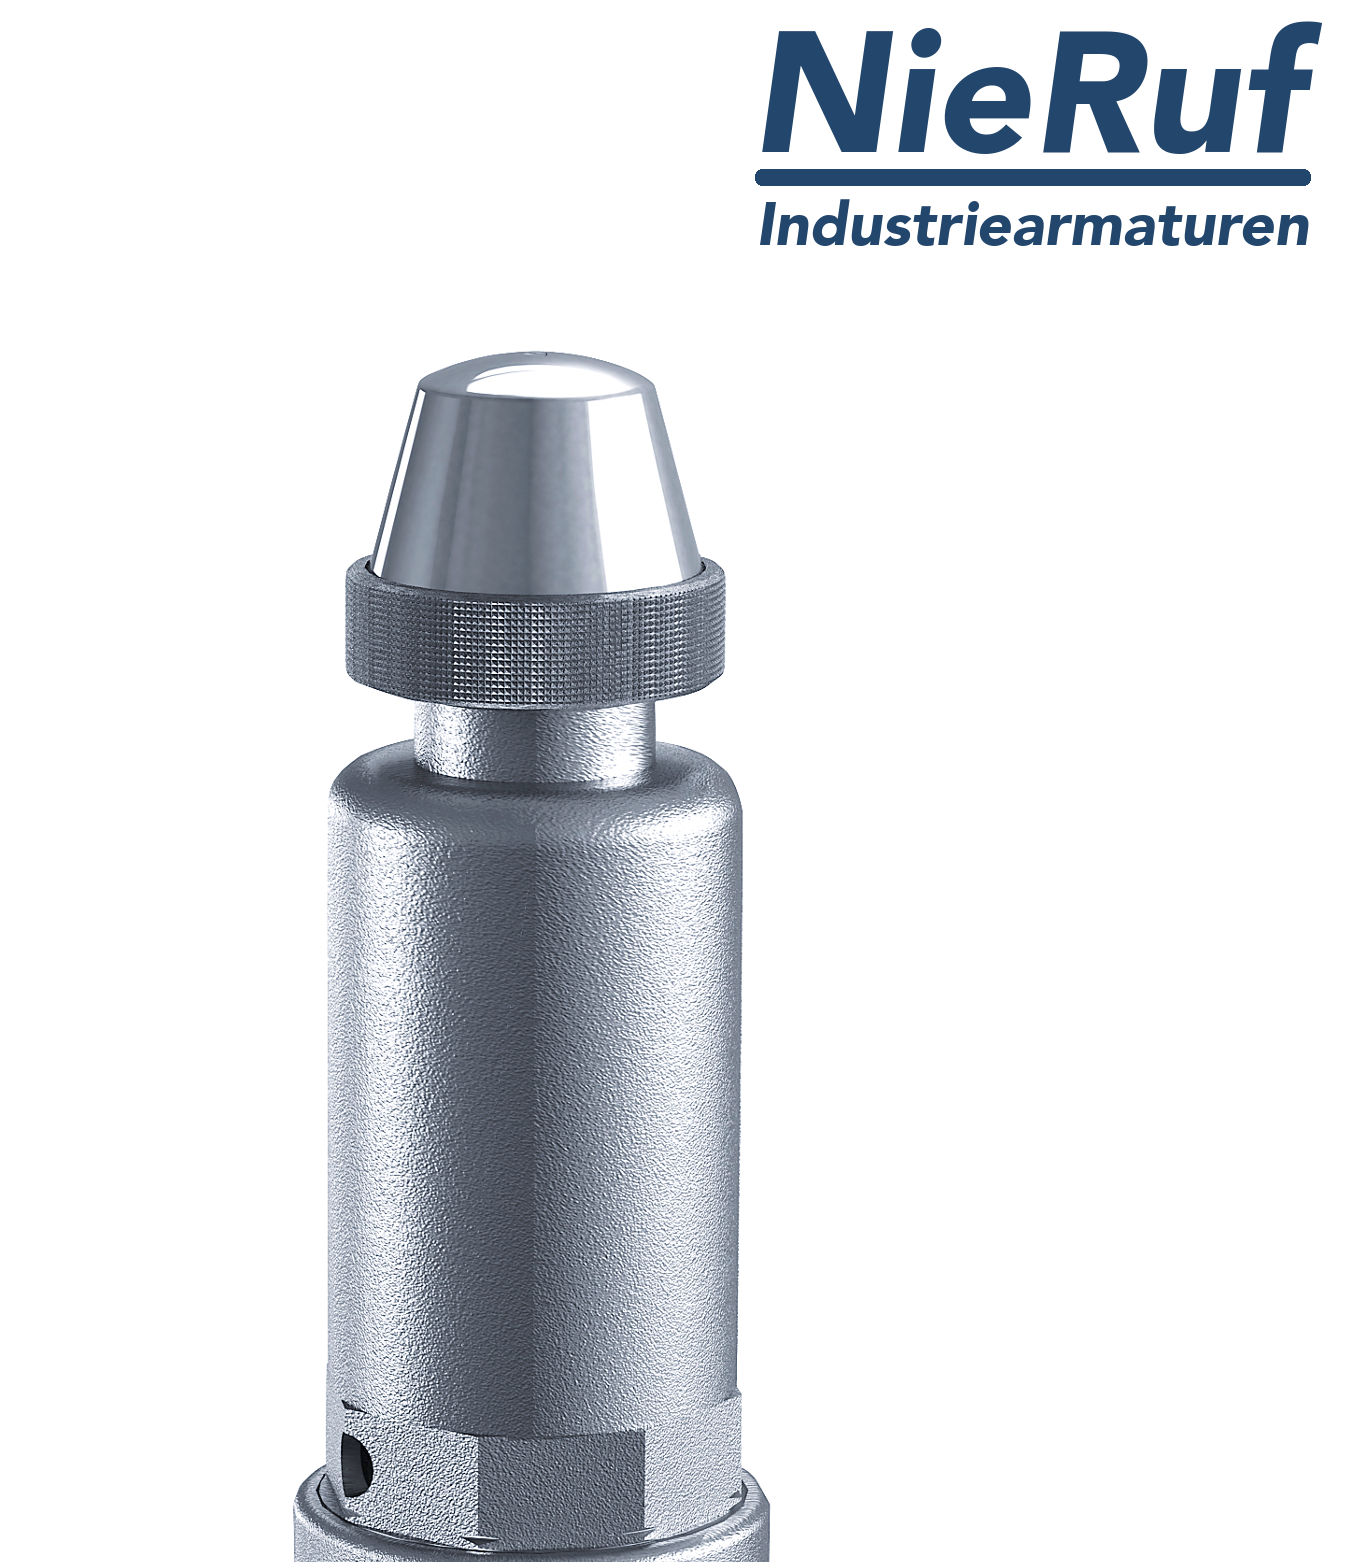 safety valve 3/4" x 1 1/4" fm SV05 neutral liquid media, stainless steel EPDM